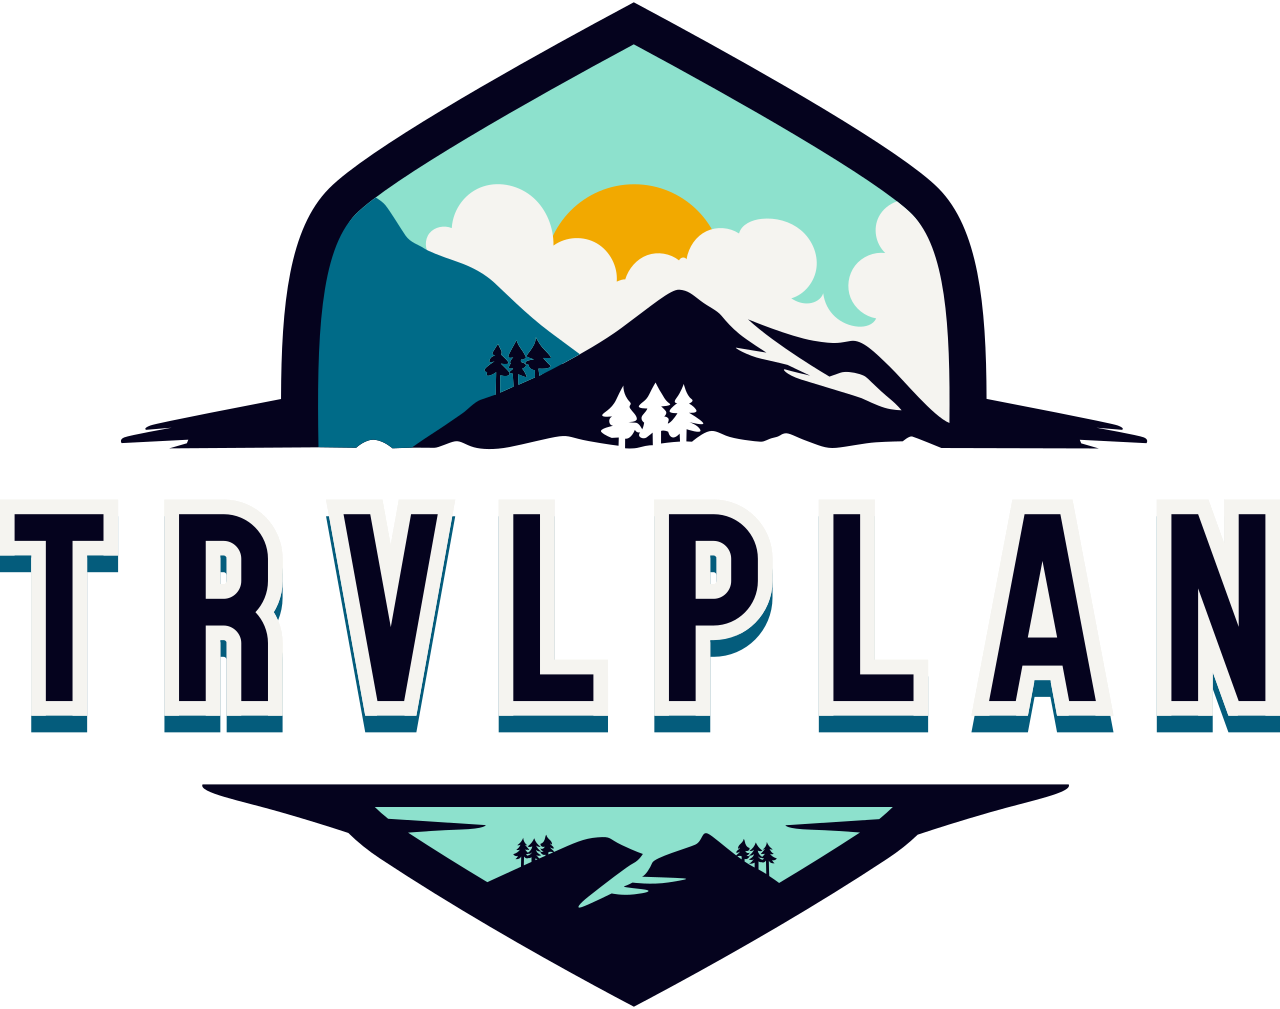 TRVLPLAN's logo